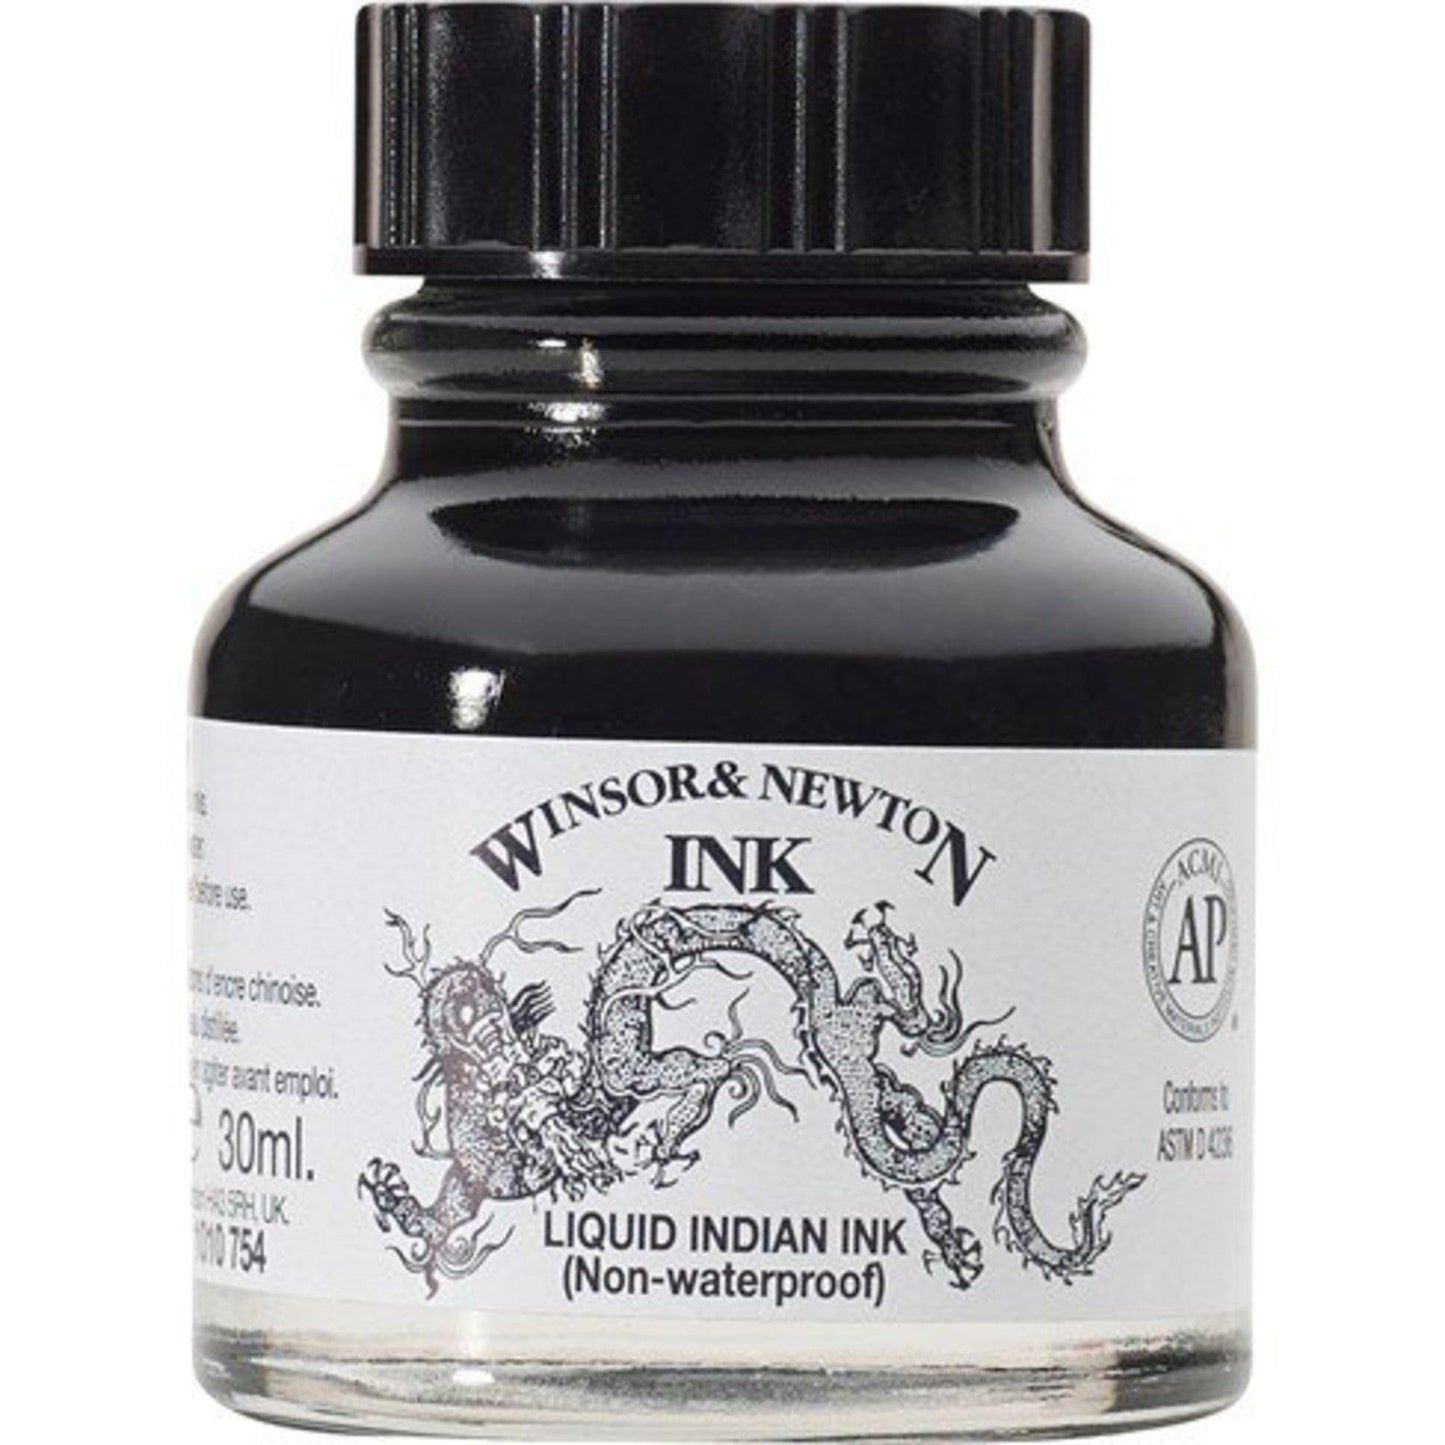 Winsor & Newton Ink Bottle Winsor & Newton - Liquid Indian Ink - 30mL Bottle - Item #1010754